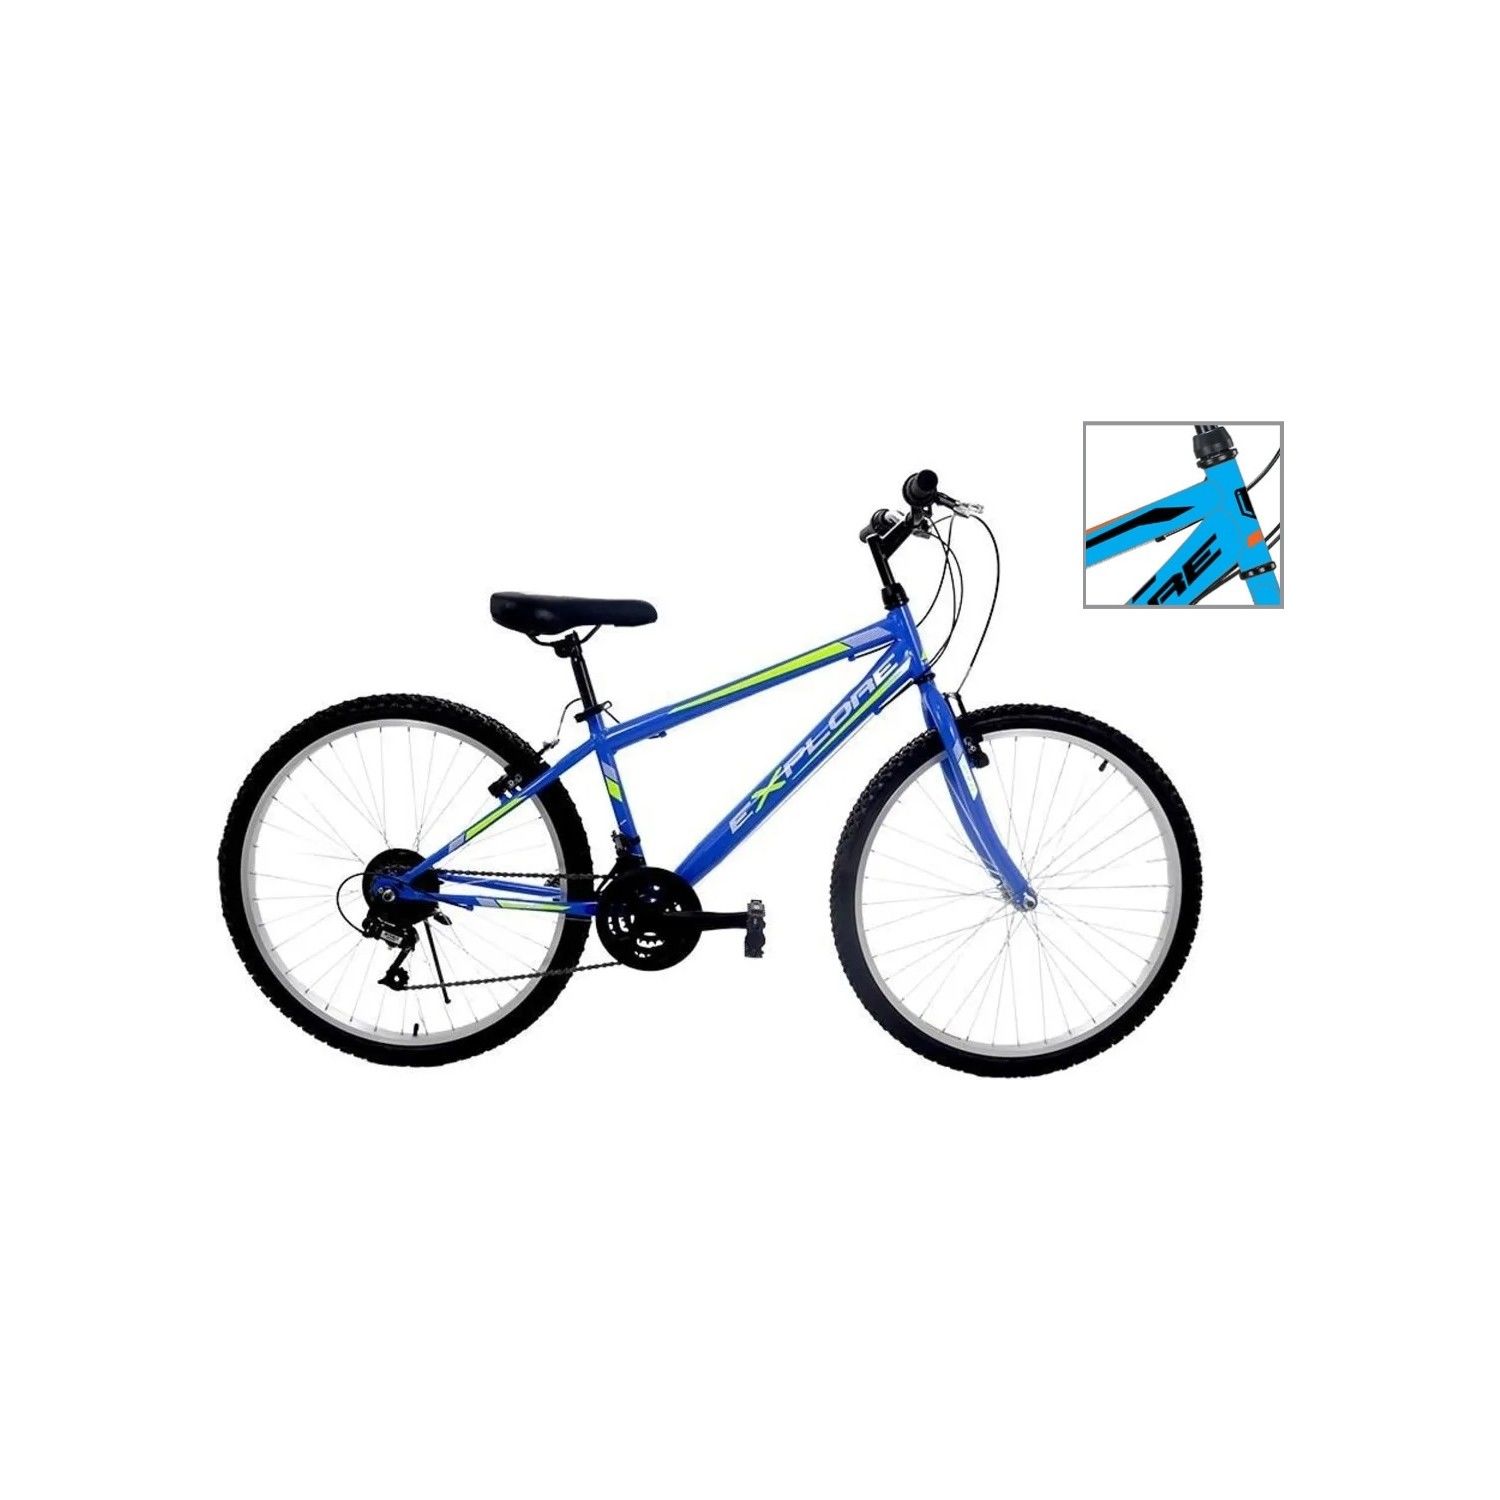 Ümit Bisiklet Ümit Explorer M 26 Jant Dağ Bisikleti Mavi